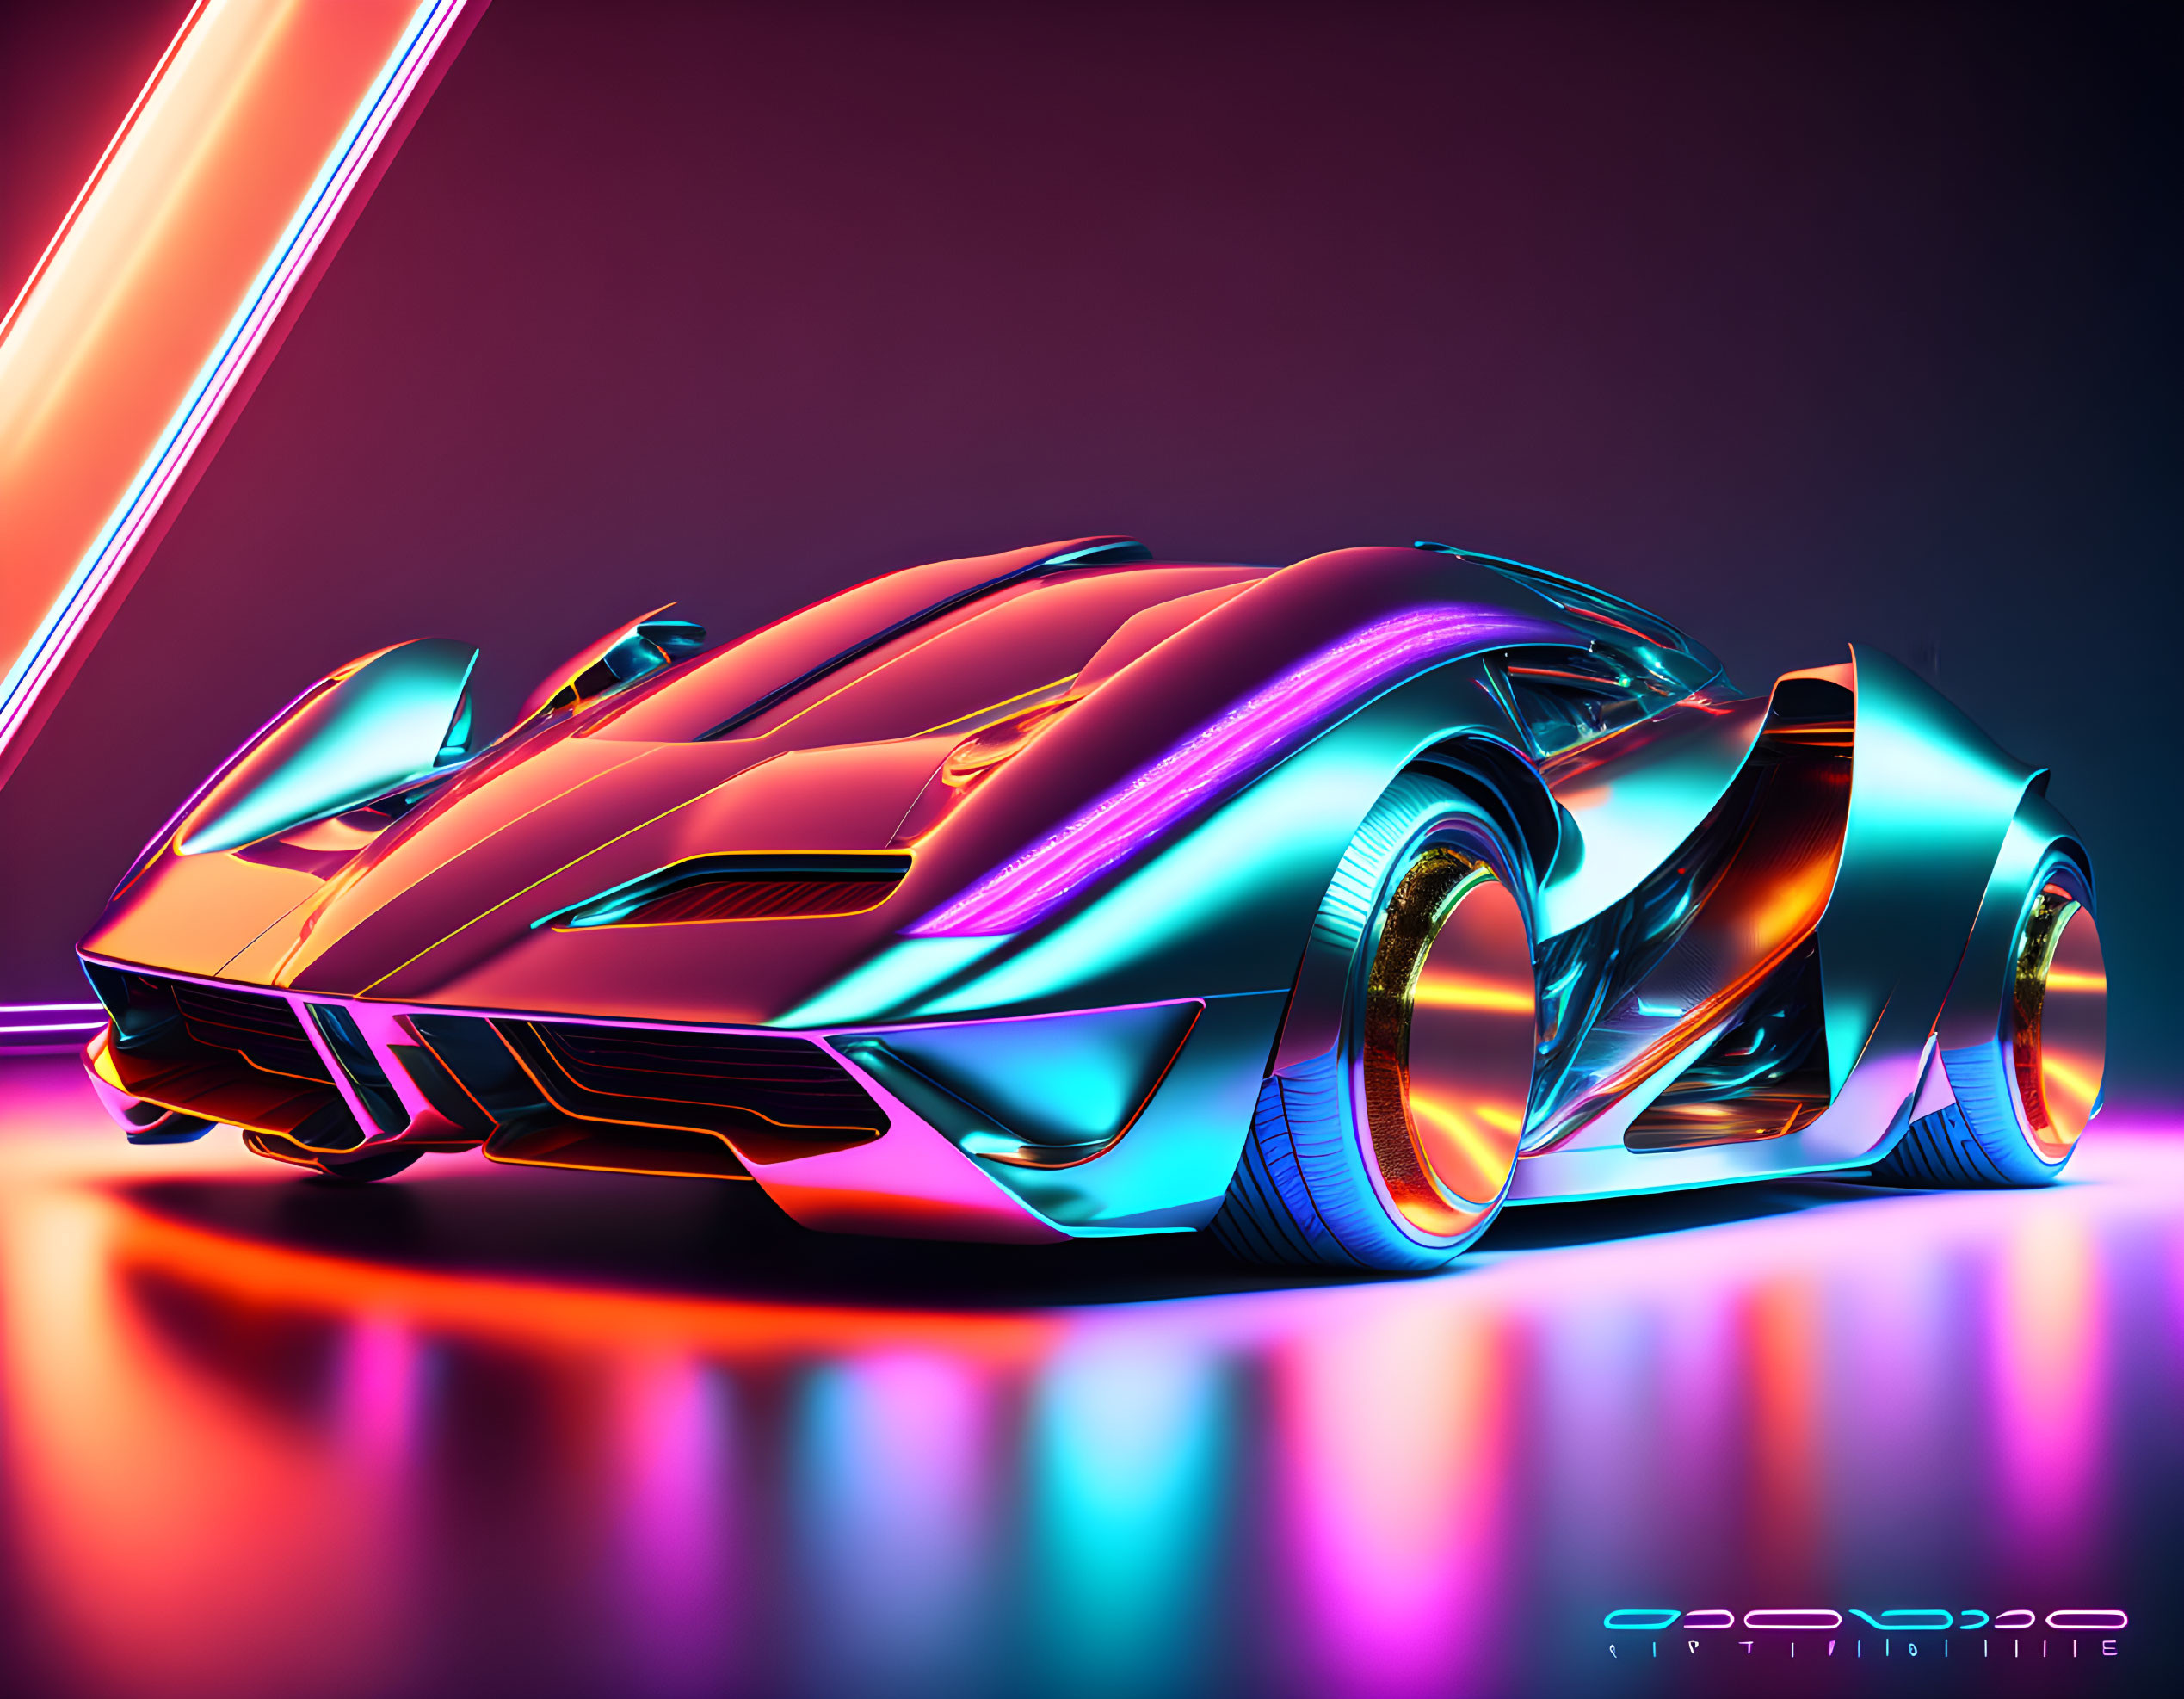 Sleek Futuristic Sports Car in Vibrant Neon Colors